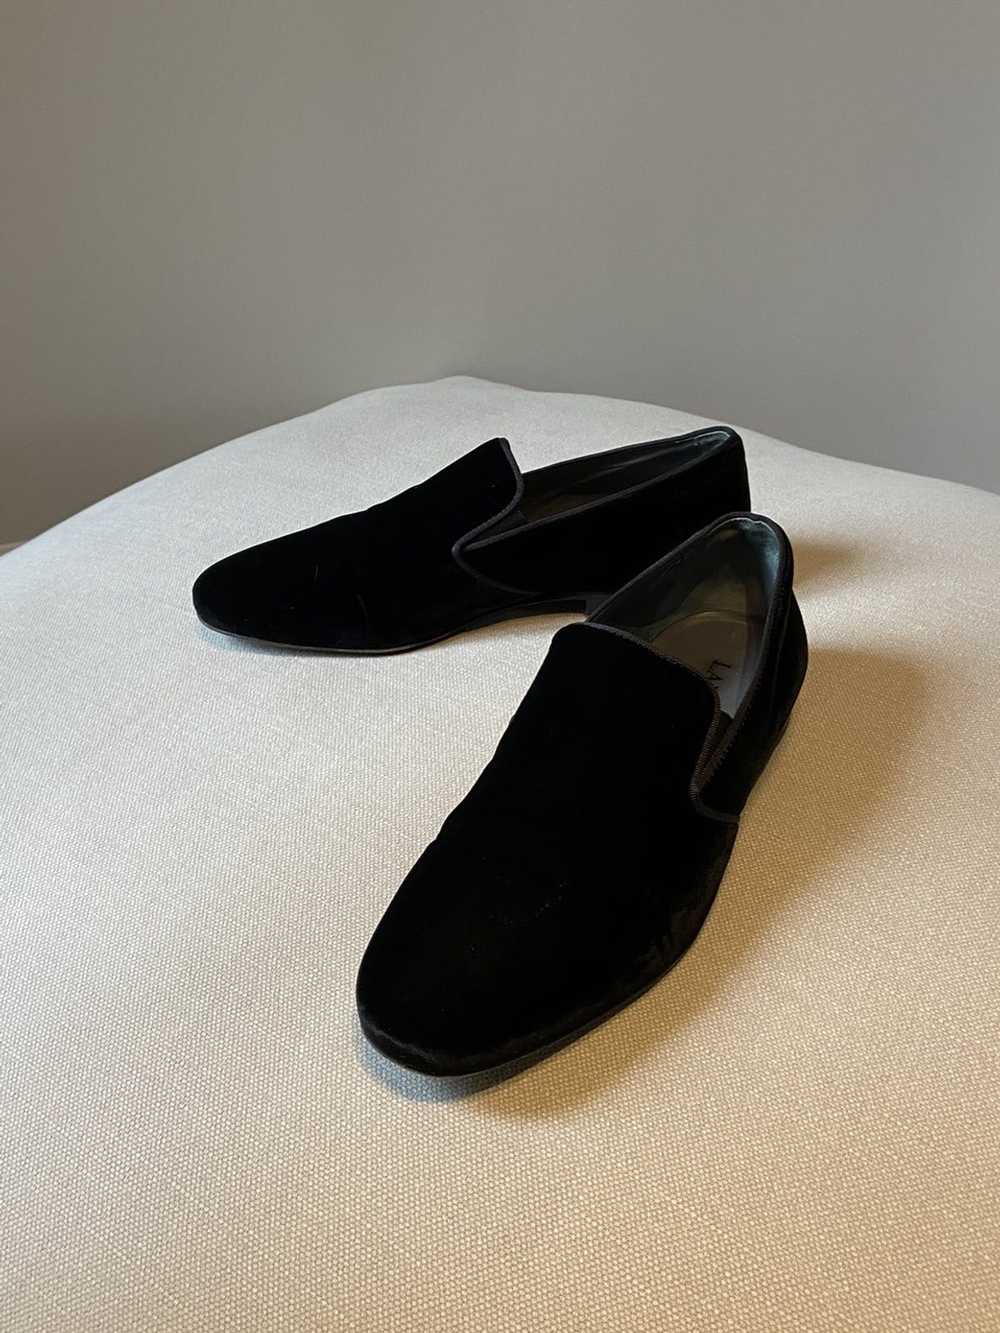 Lanvin Lanvin velvet black formal shoes - image 5